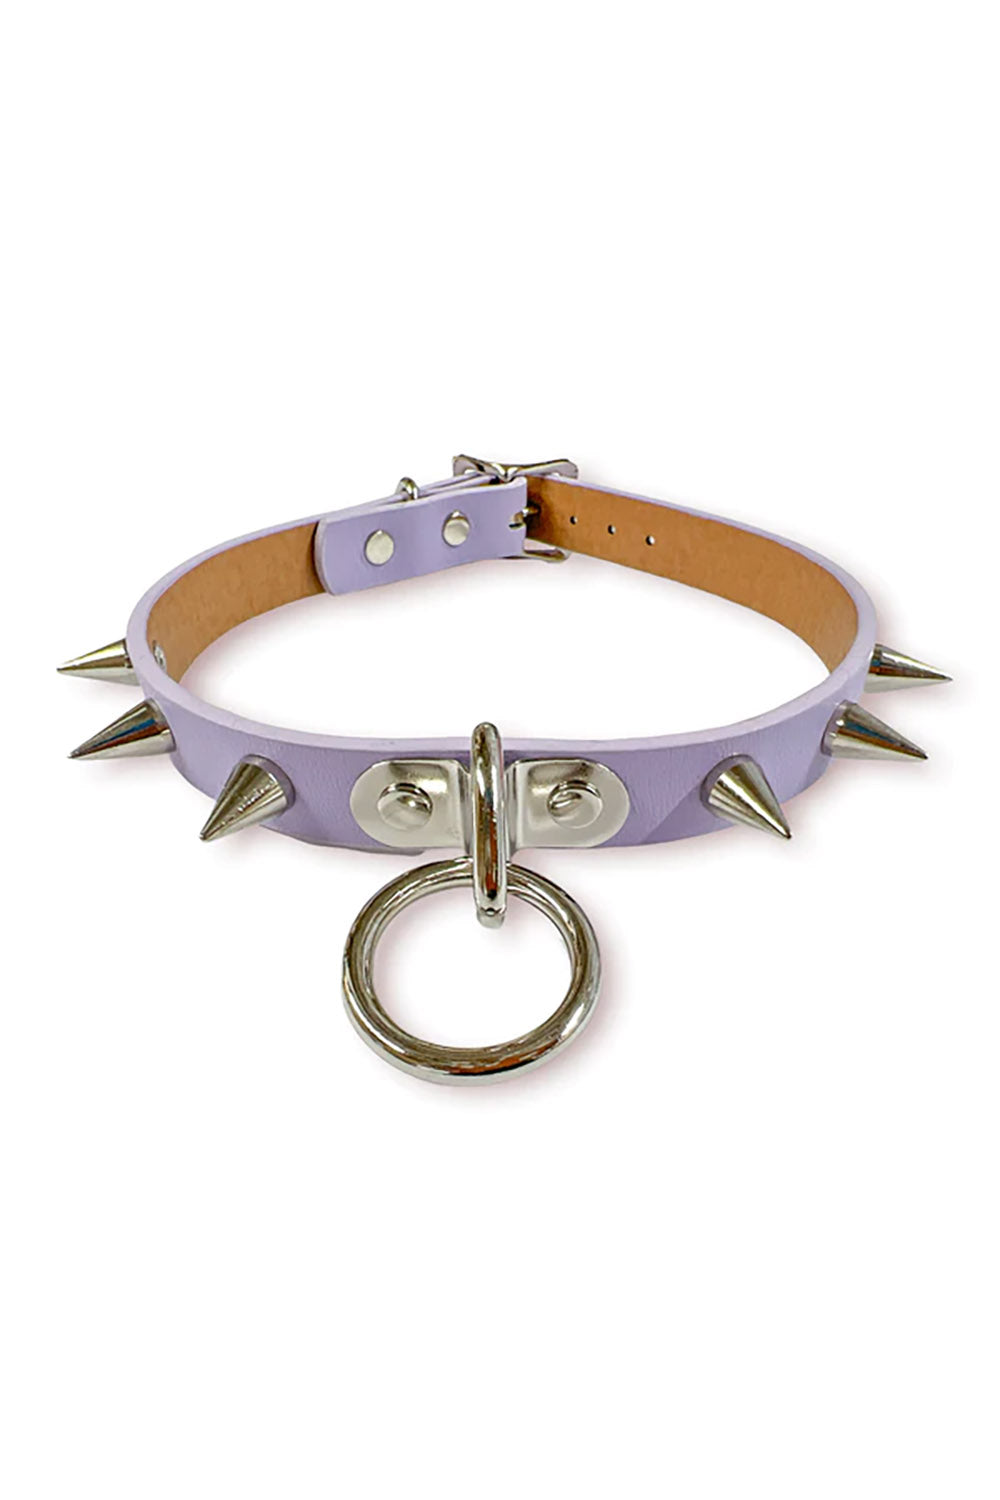 vegan leather purple spiked collar